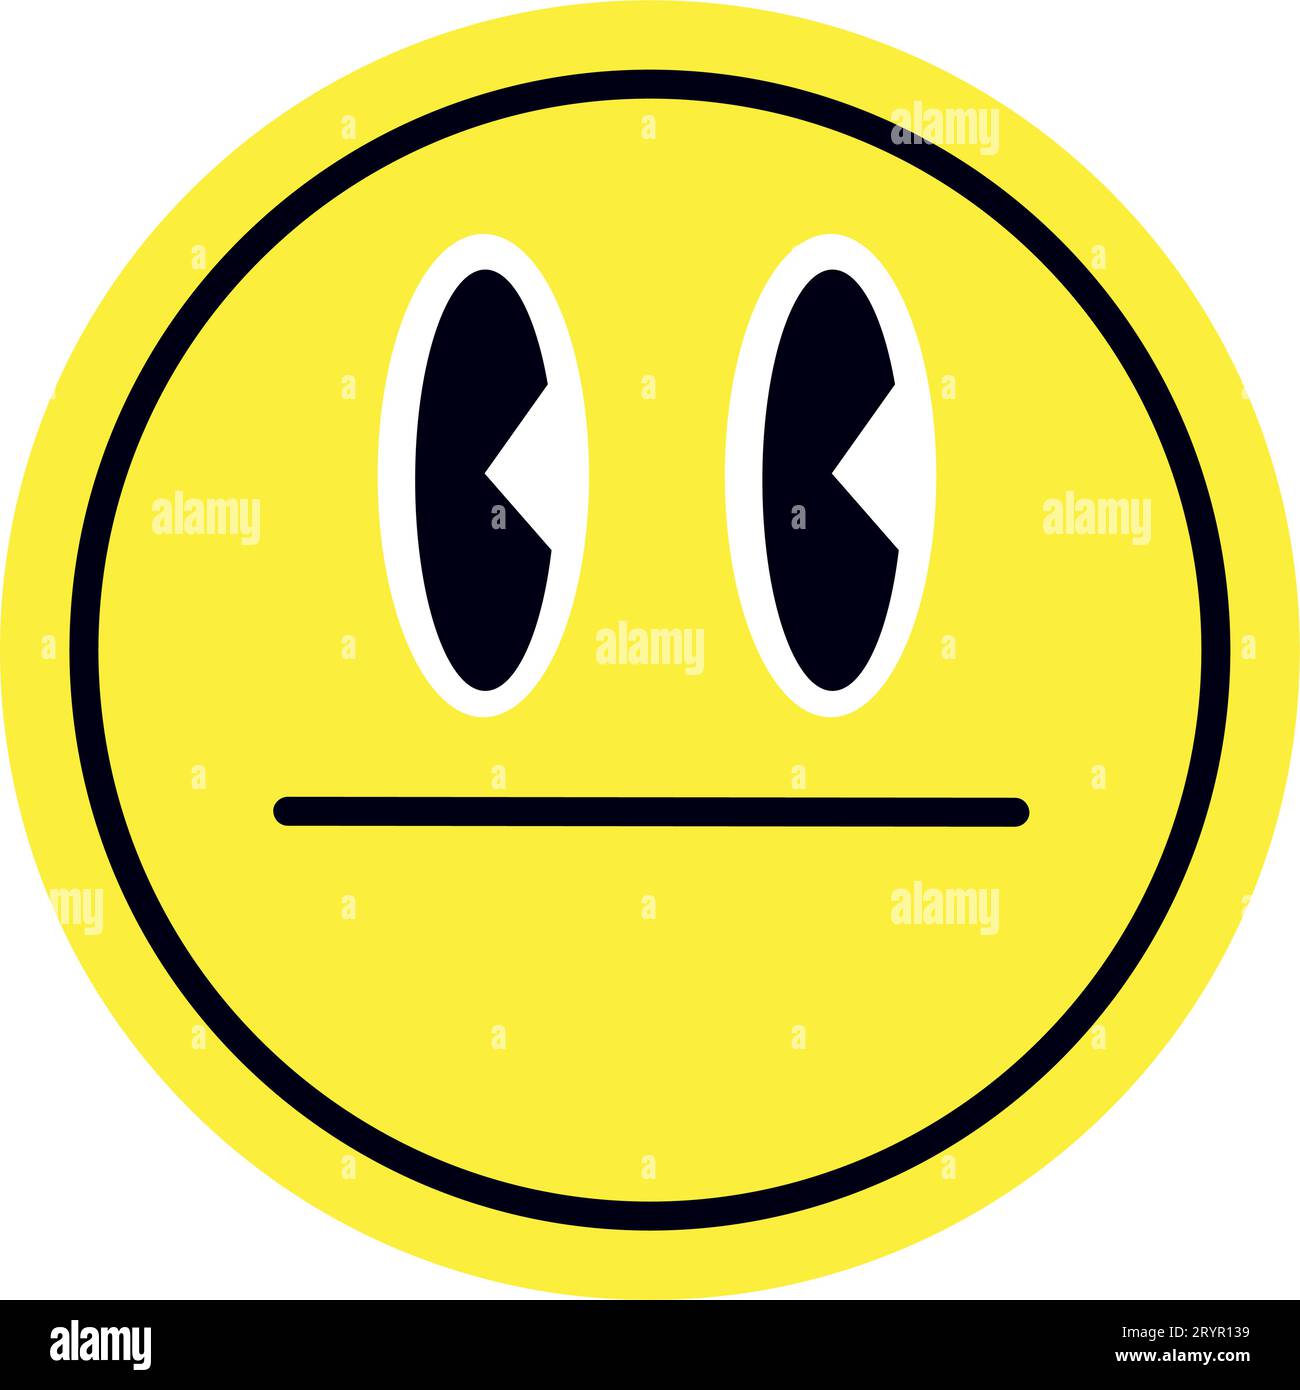 Set Trendy Retro Stickers Smile Faces 90S Elements Patches